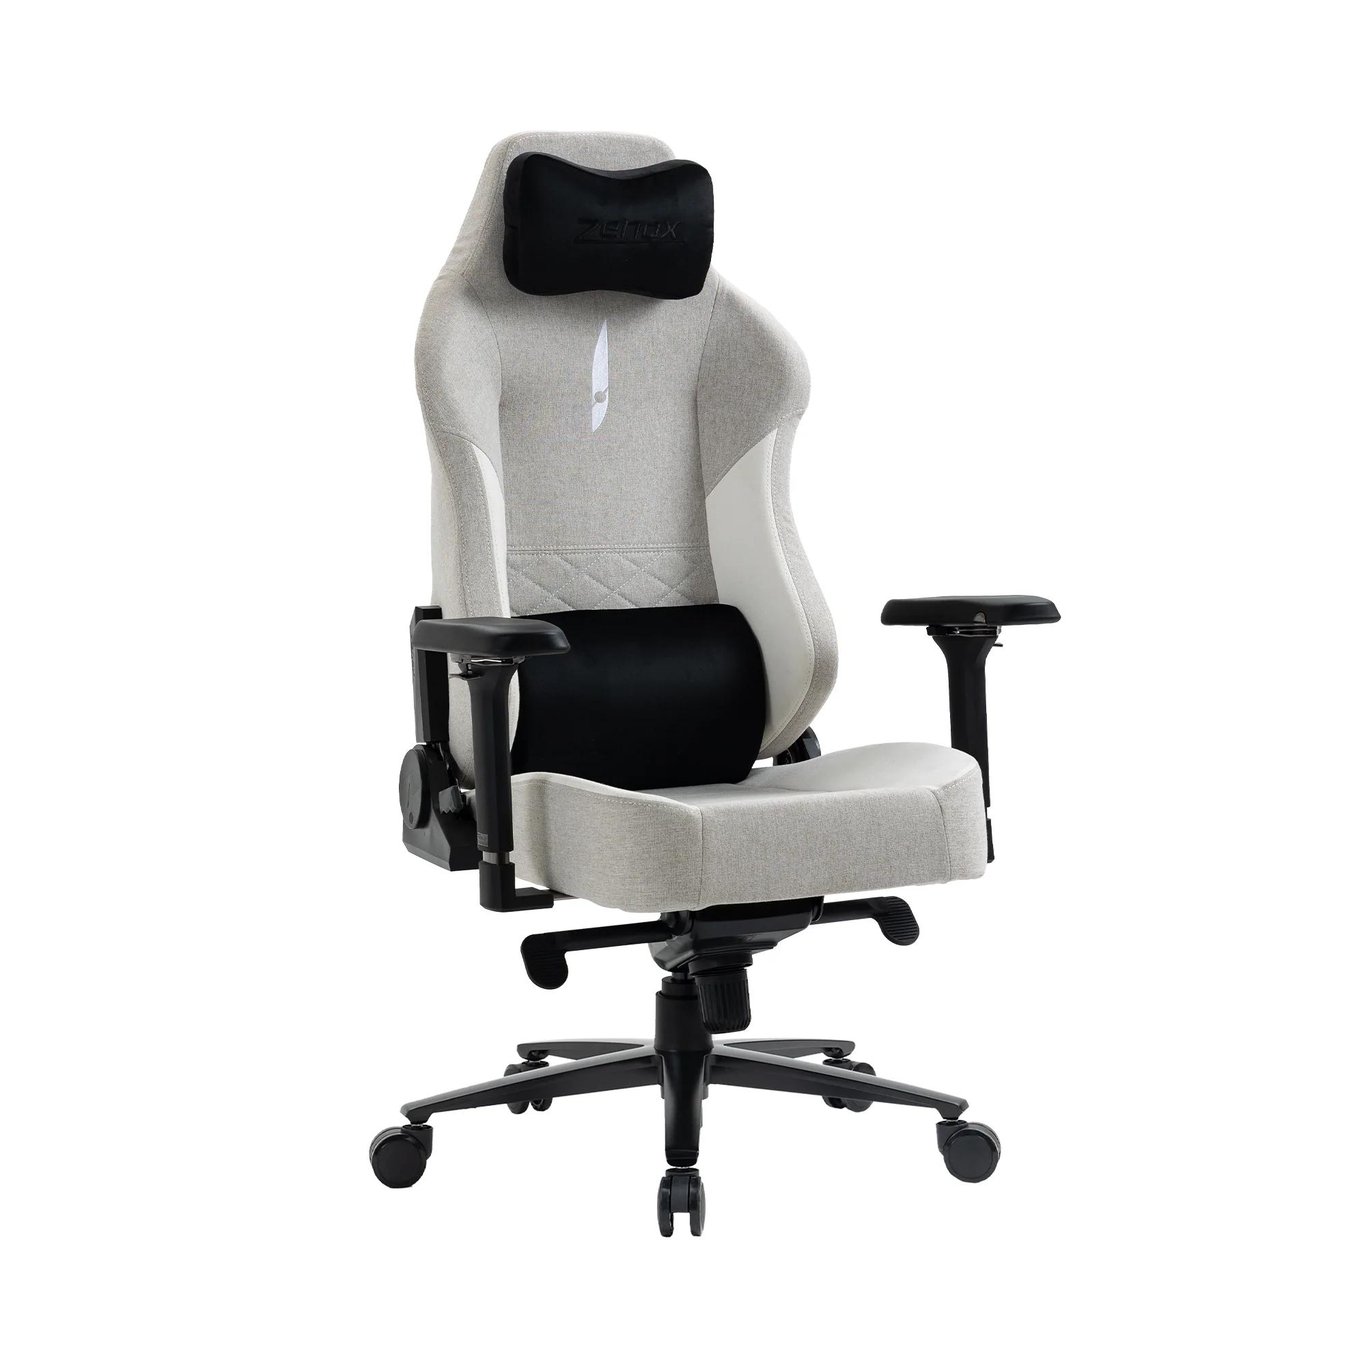 Zenox Spectre-MK2 Racing Chair 電競椅 - Fabric/Light Grey 布面/淺灰色